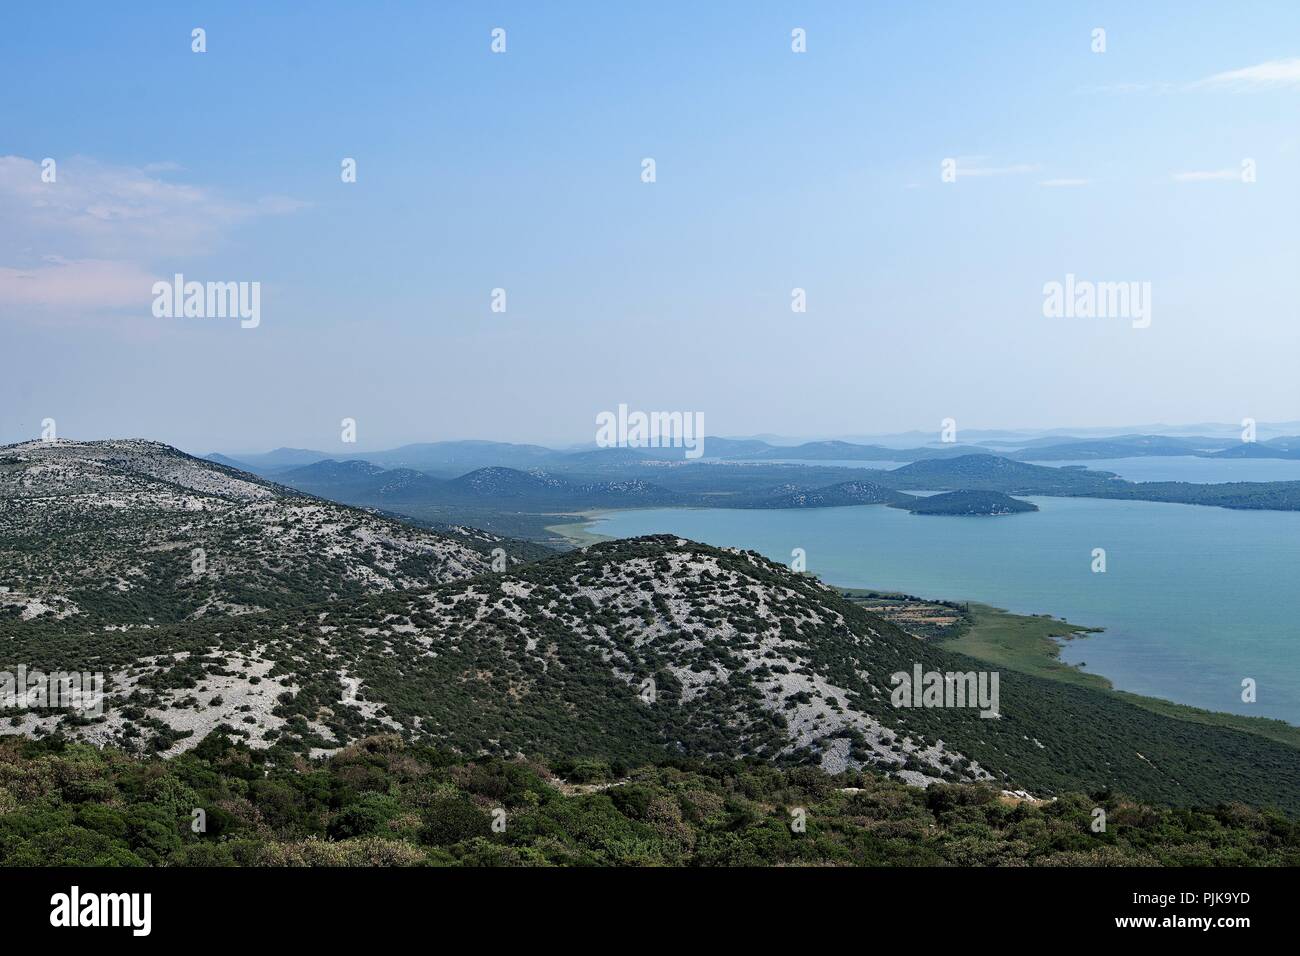 View of Vransko Jezero, the largest naturally occurring lake in Croatia. Stock Photo